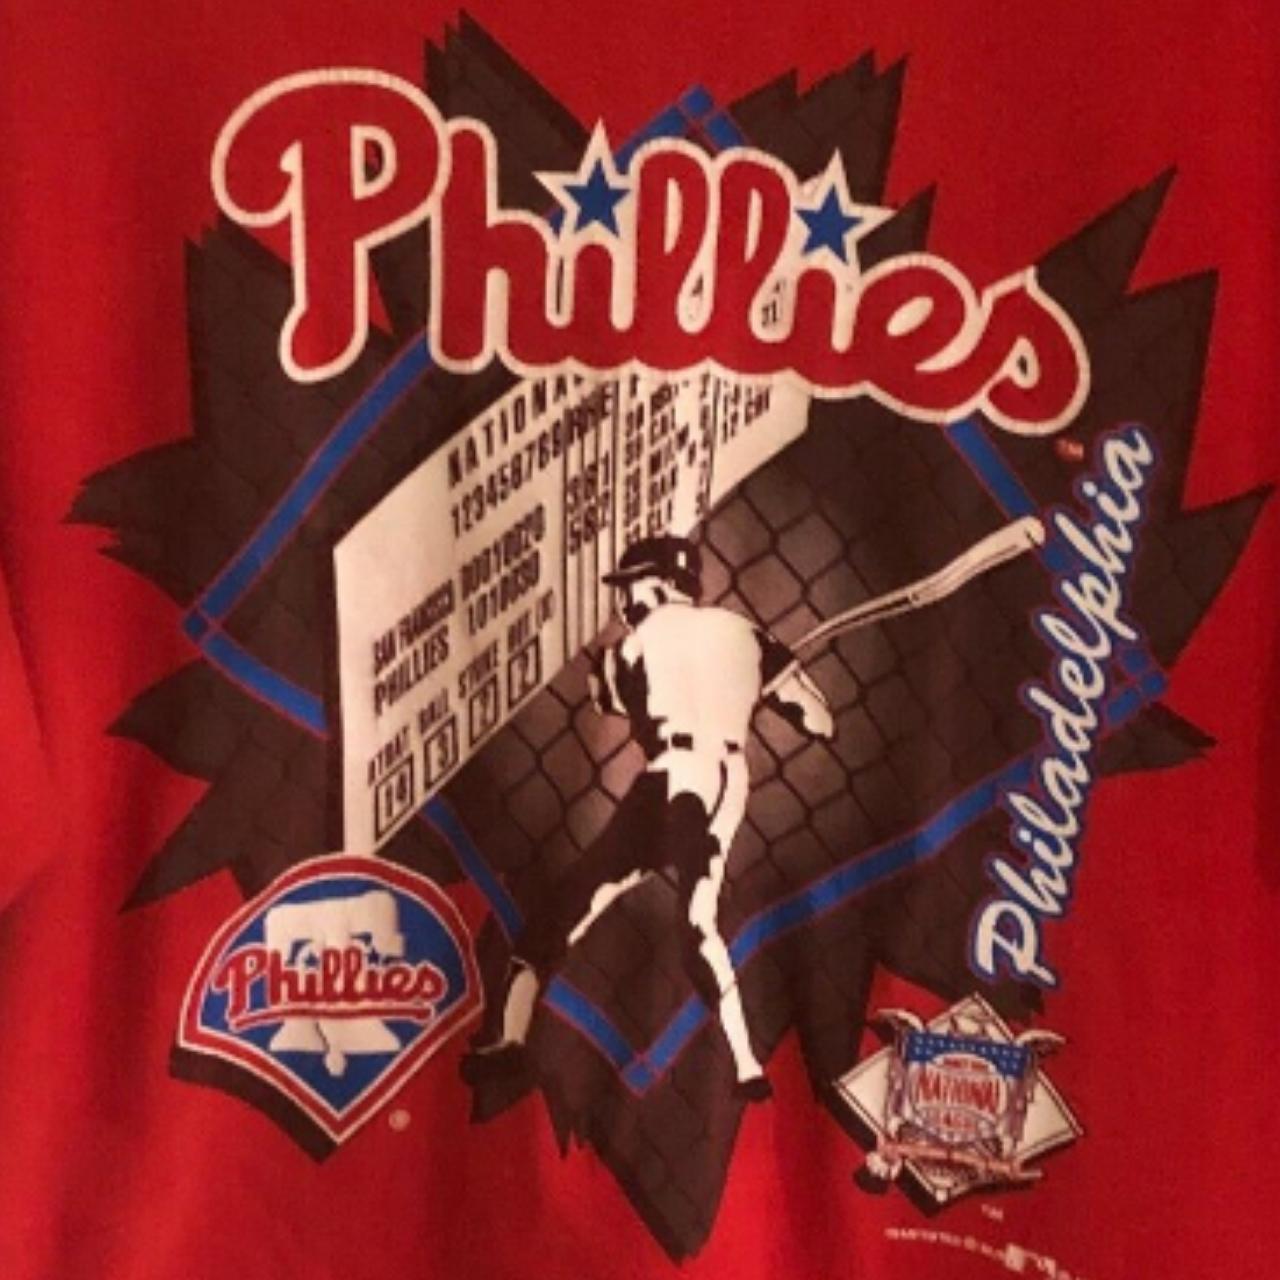 Vintage Philadelphia Phillies National 1993 - Depop